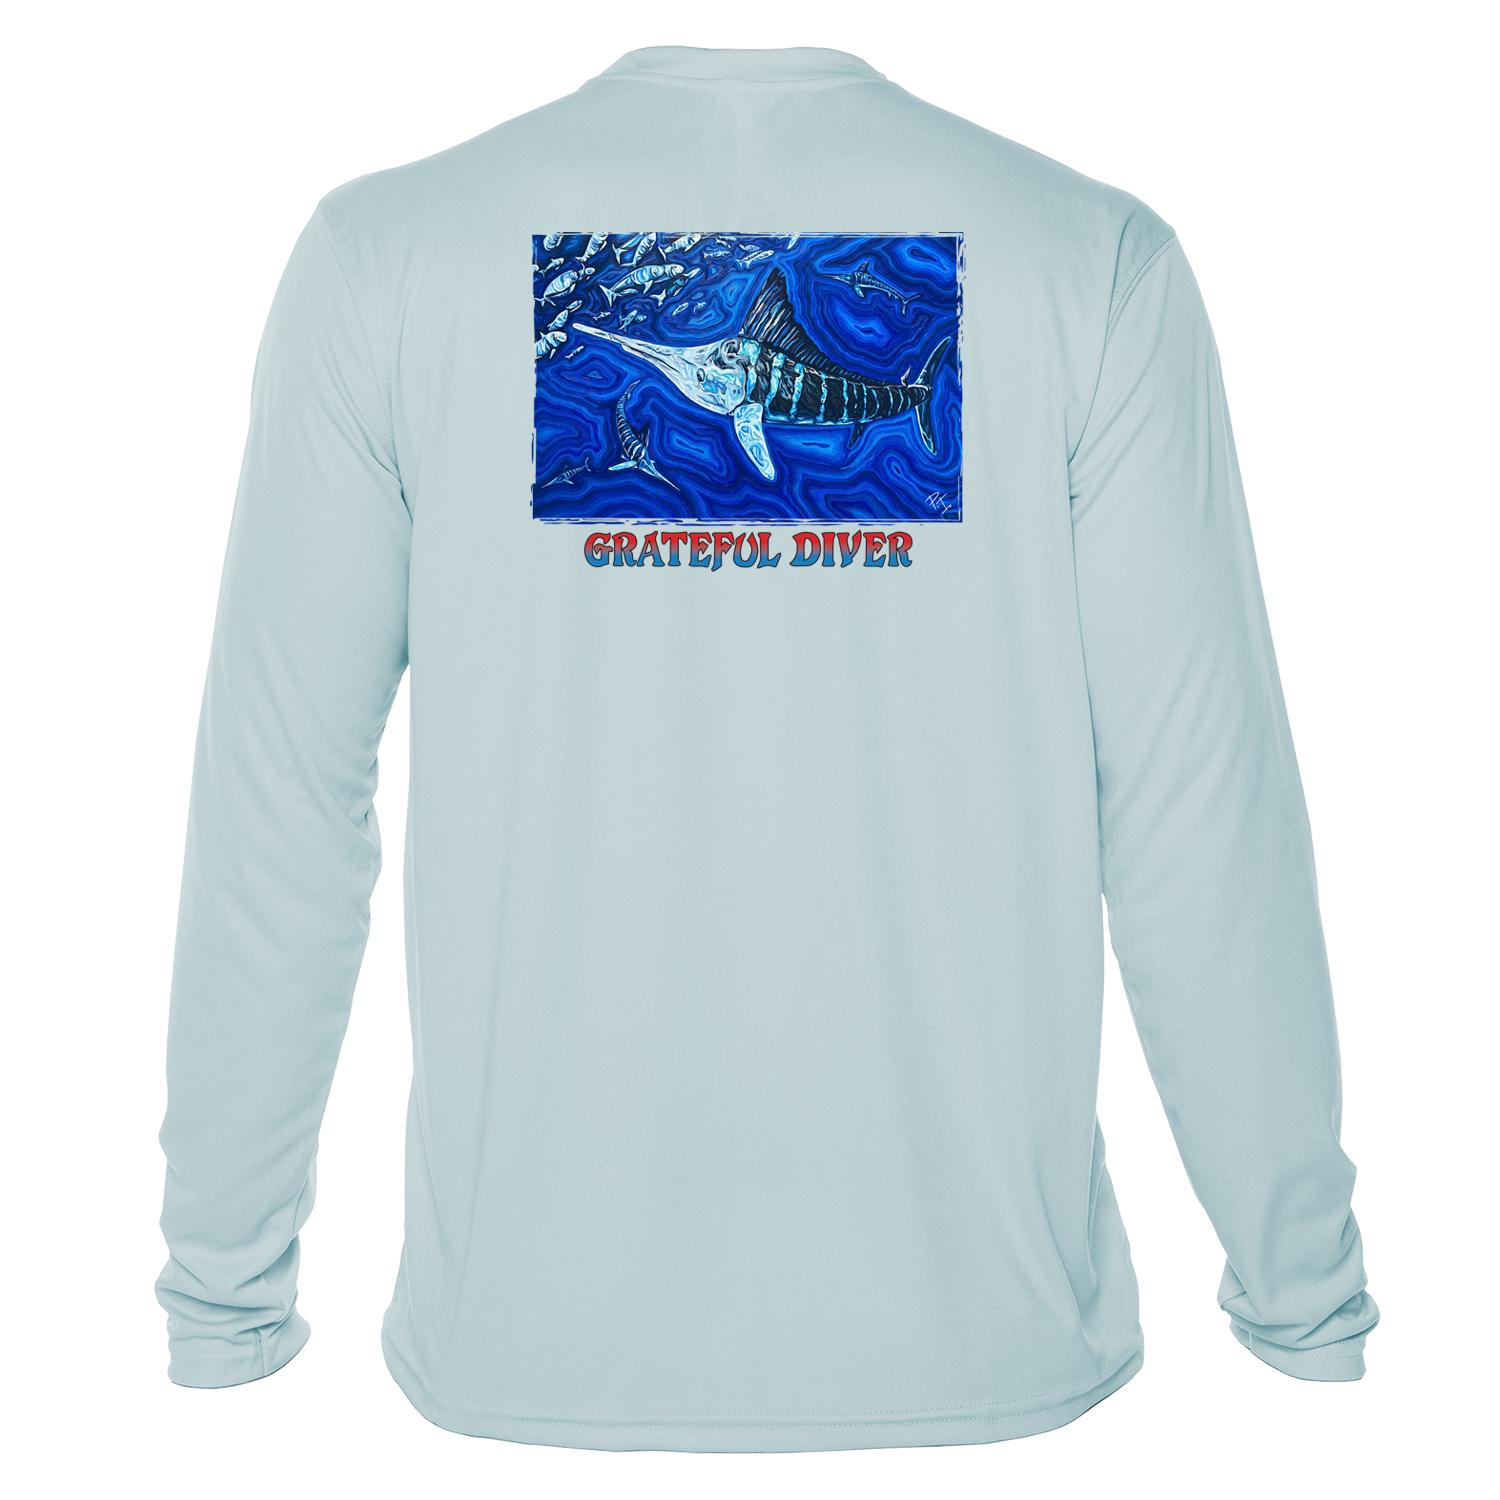 Grateful Diver Artist's Collection by Irina Pushkareva: Source of Light UV Shirt in arctic blue back shot off figure